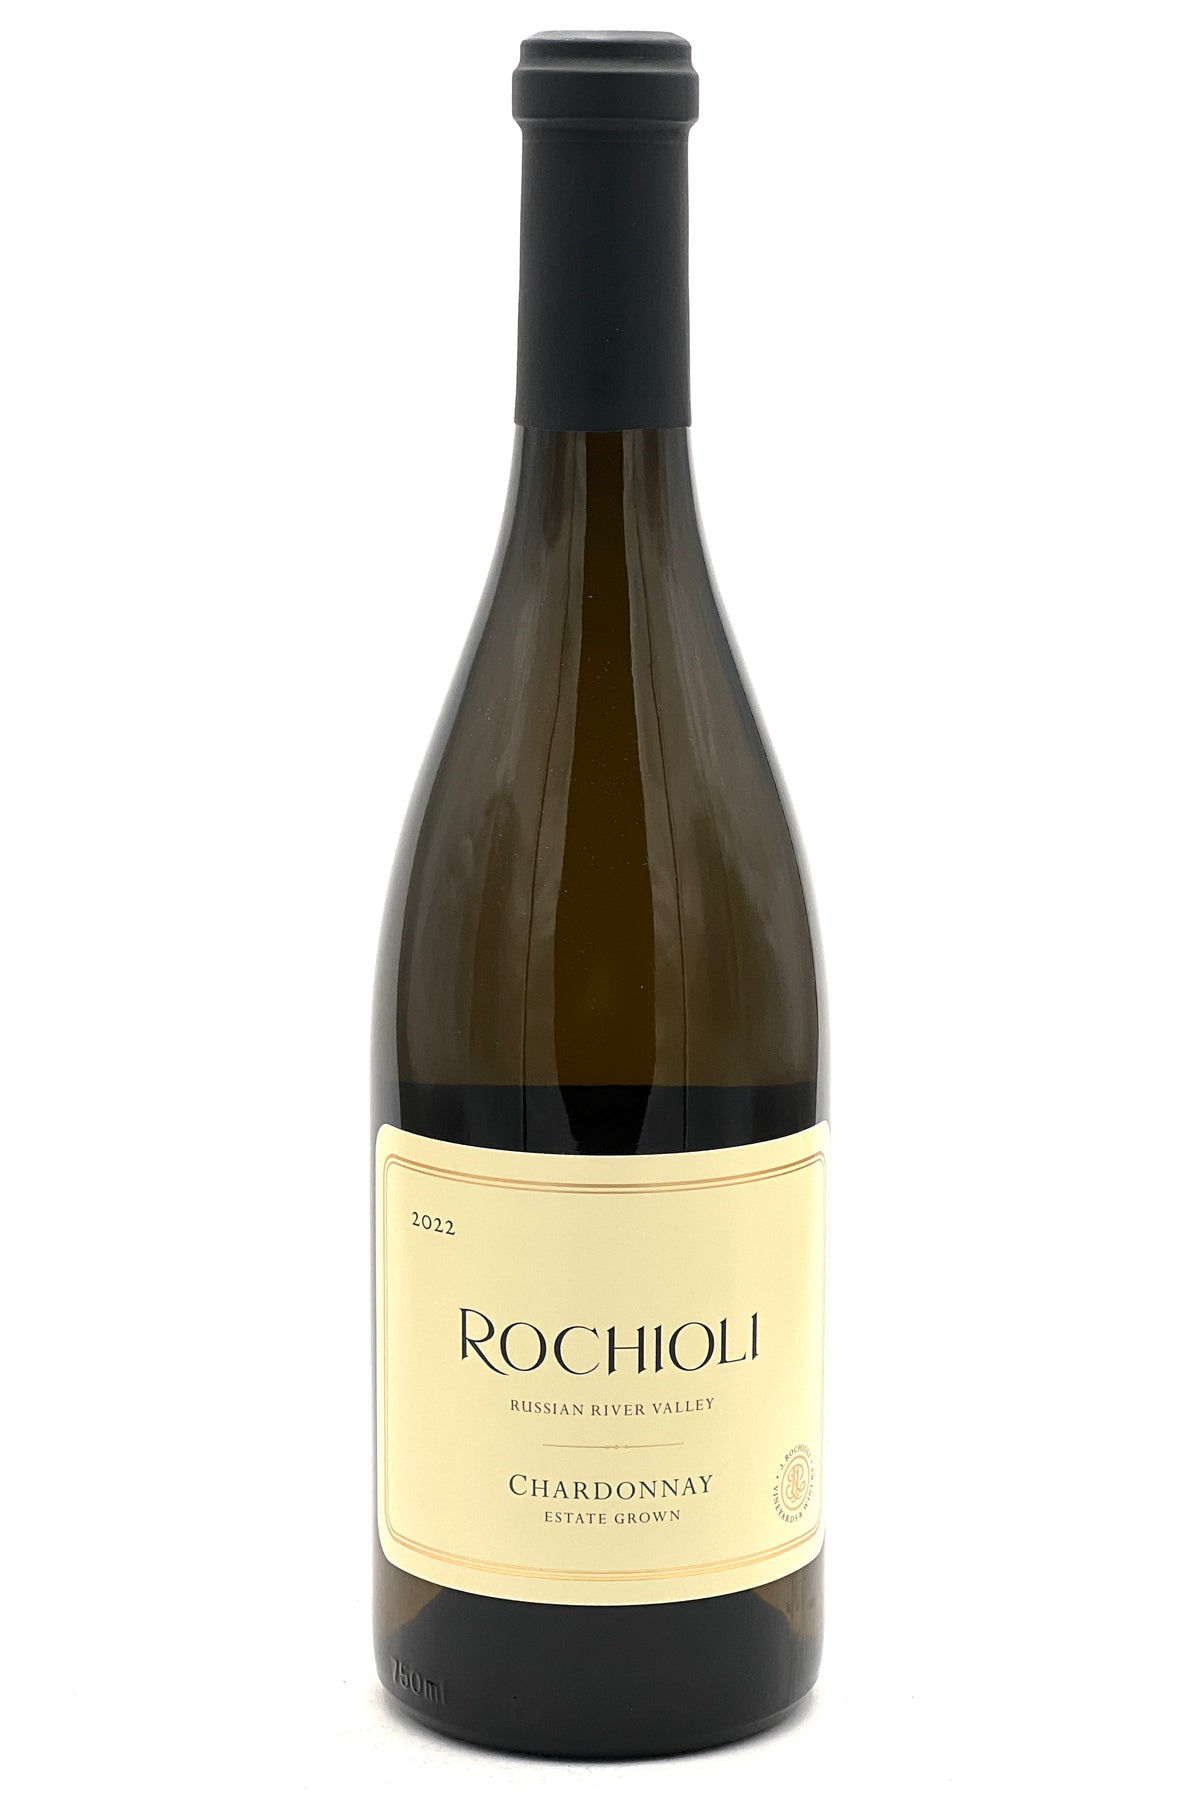 Rochioli 2022 Chardonnay Russian River Valley